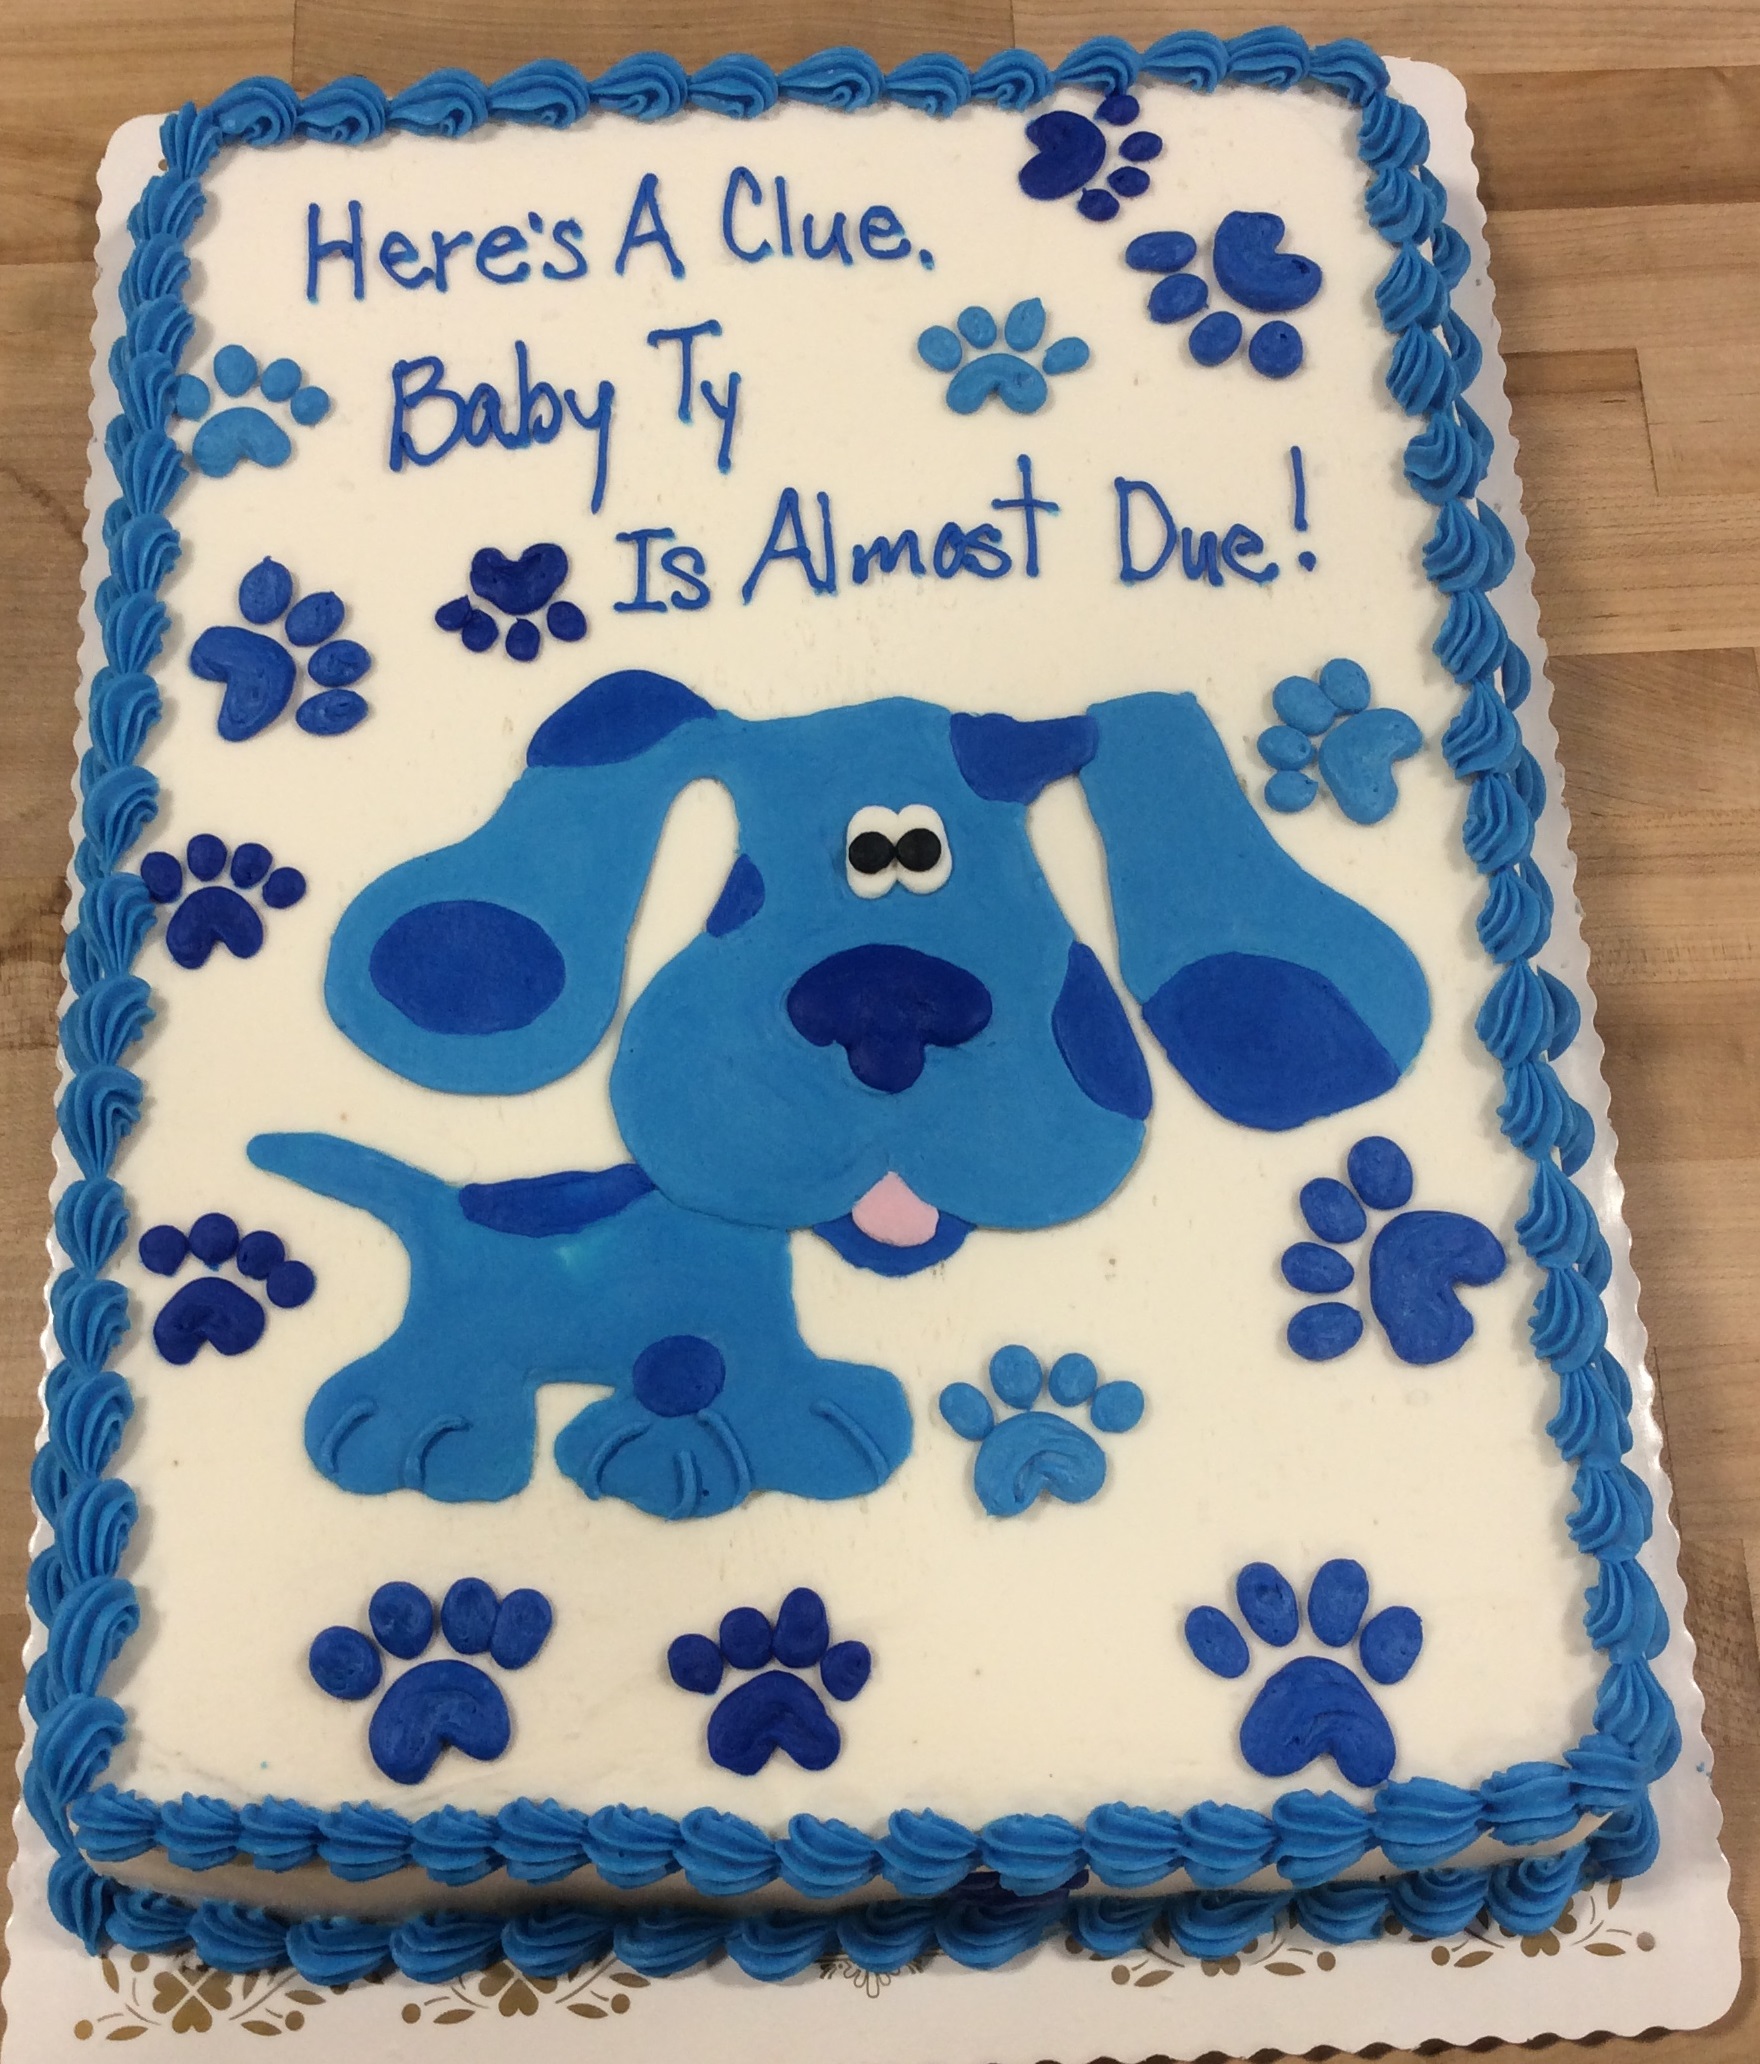 Blues Clues Printable Cake Templat blues clues cake Birthday cake